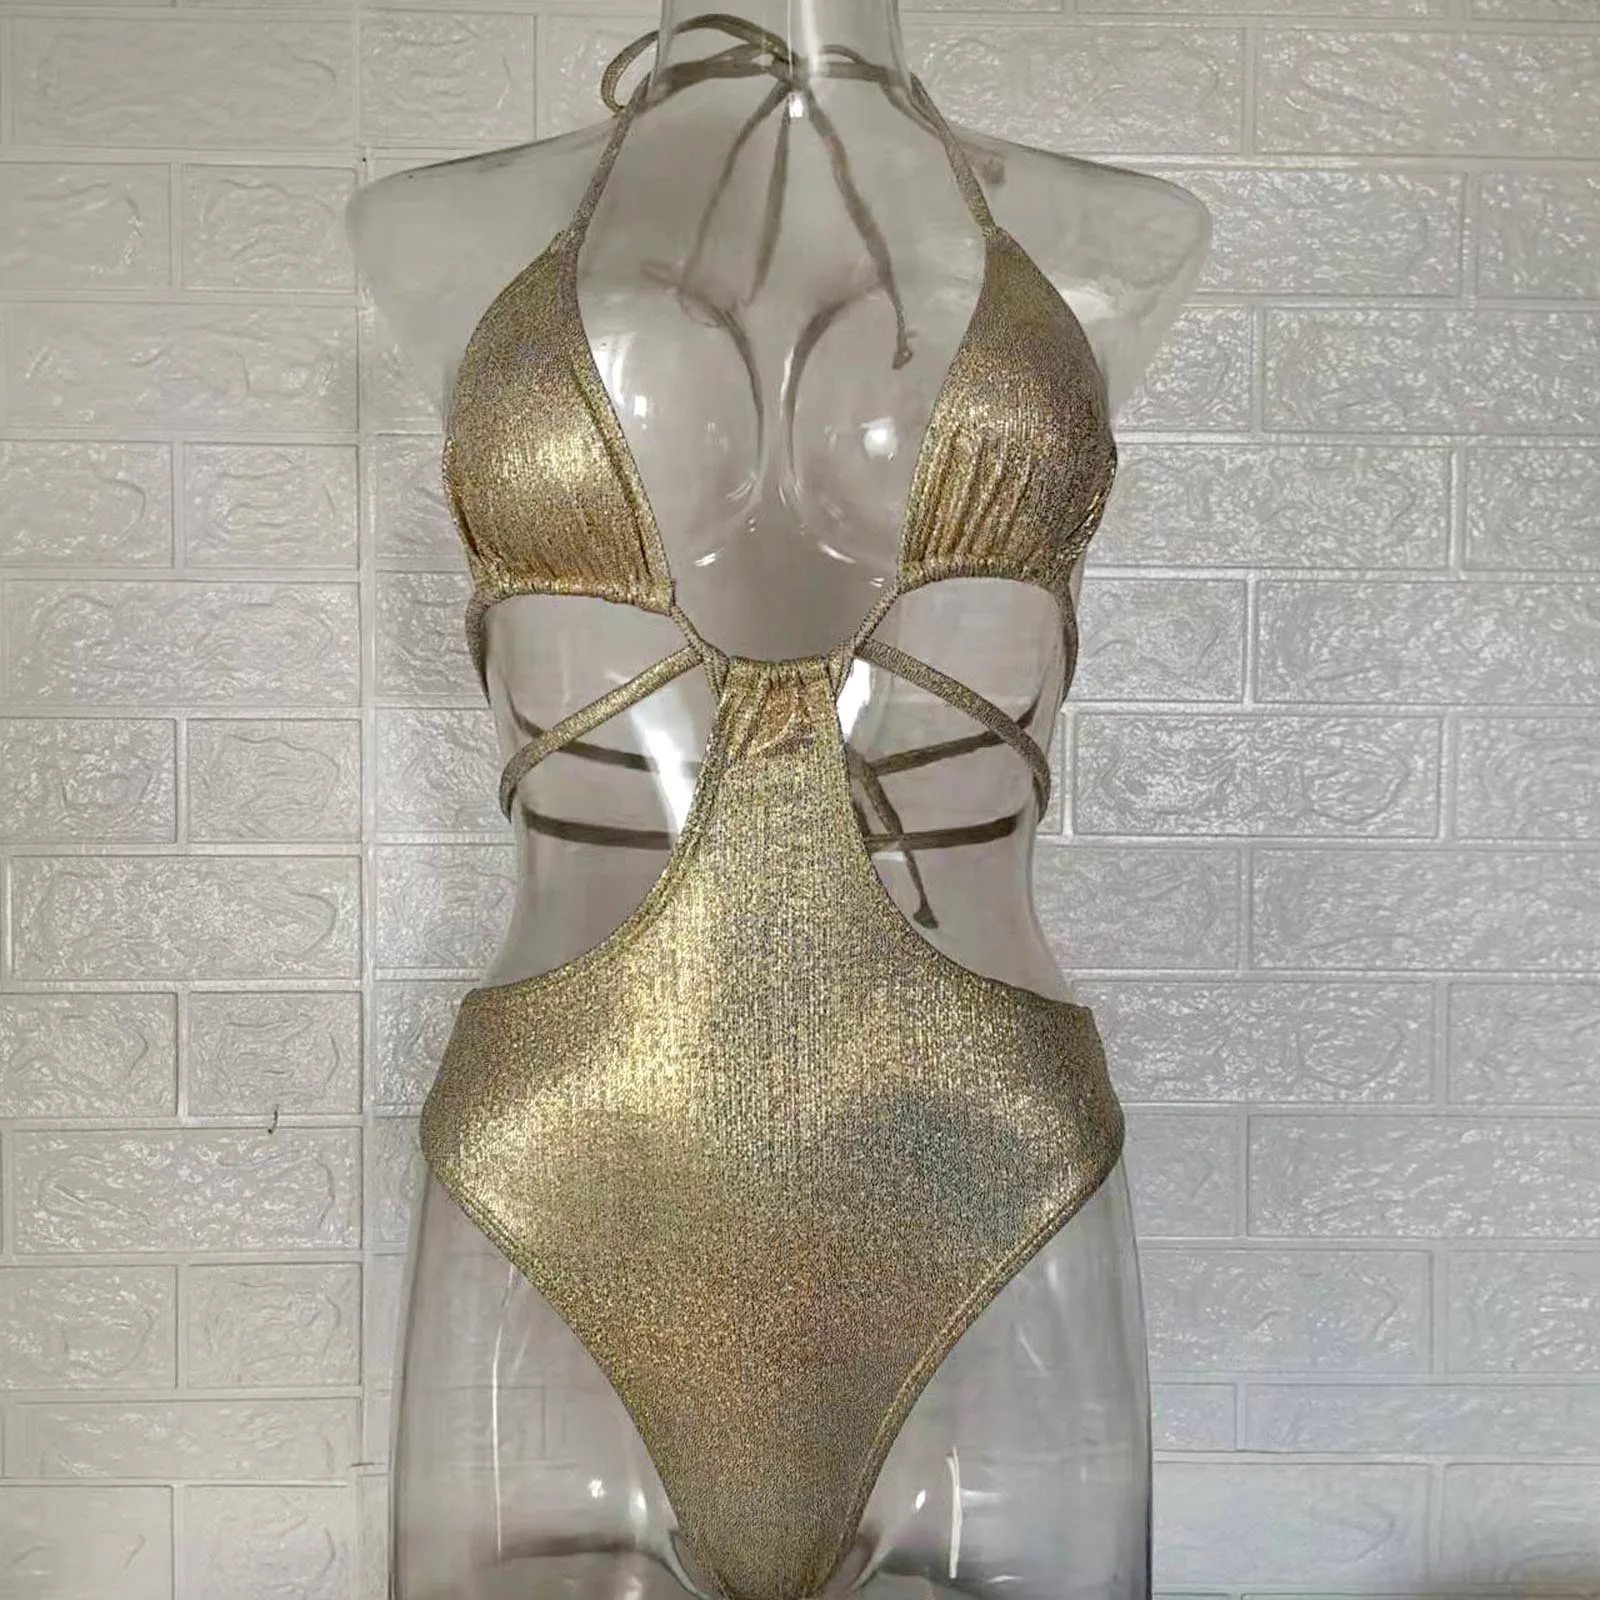 Newest One-piece Women's Halter Bikini With Chest Pads Swimsuit High Waist Bathing Suit Gold Foil Fabric Bodysuit Biquini bikini cover